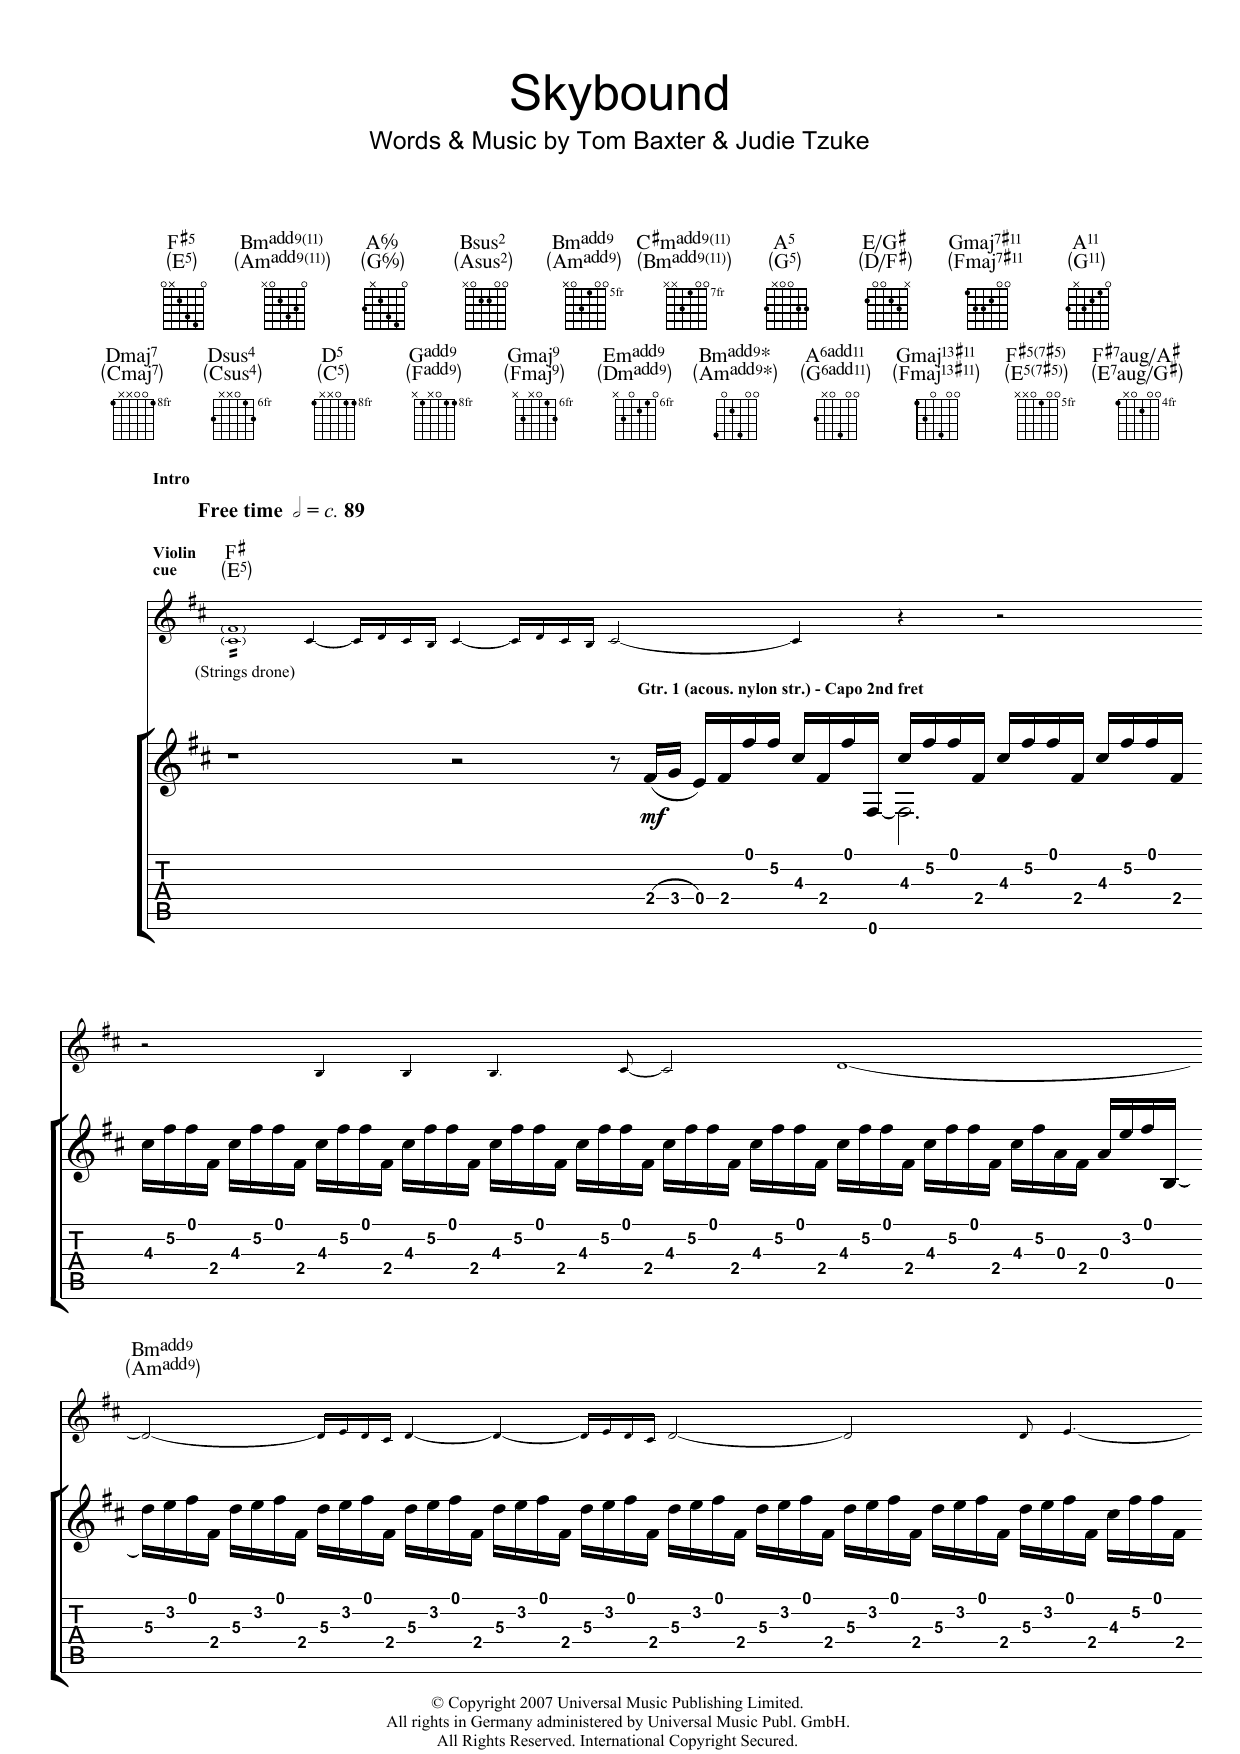 Tom Baxter Skybound Sheet Music Notes & Chords for Guitar Tab - Download or Print PDF